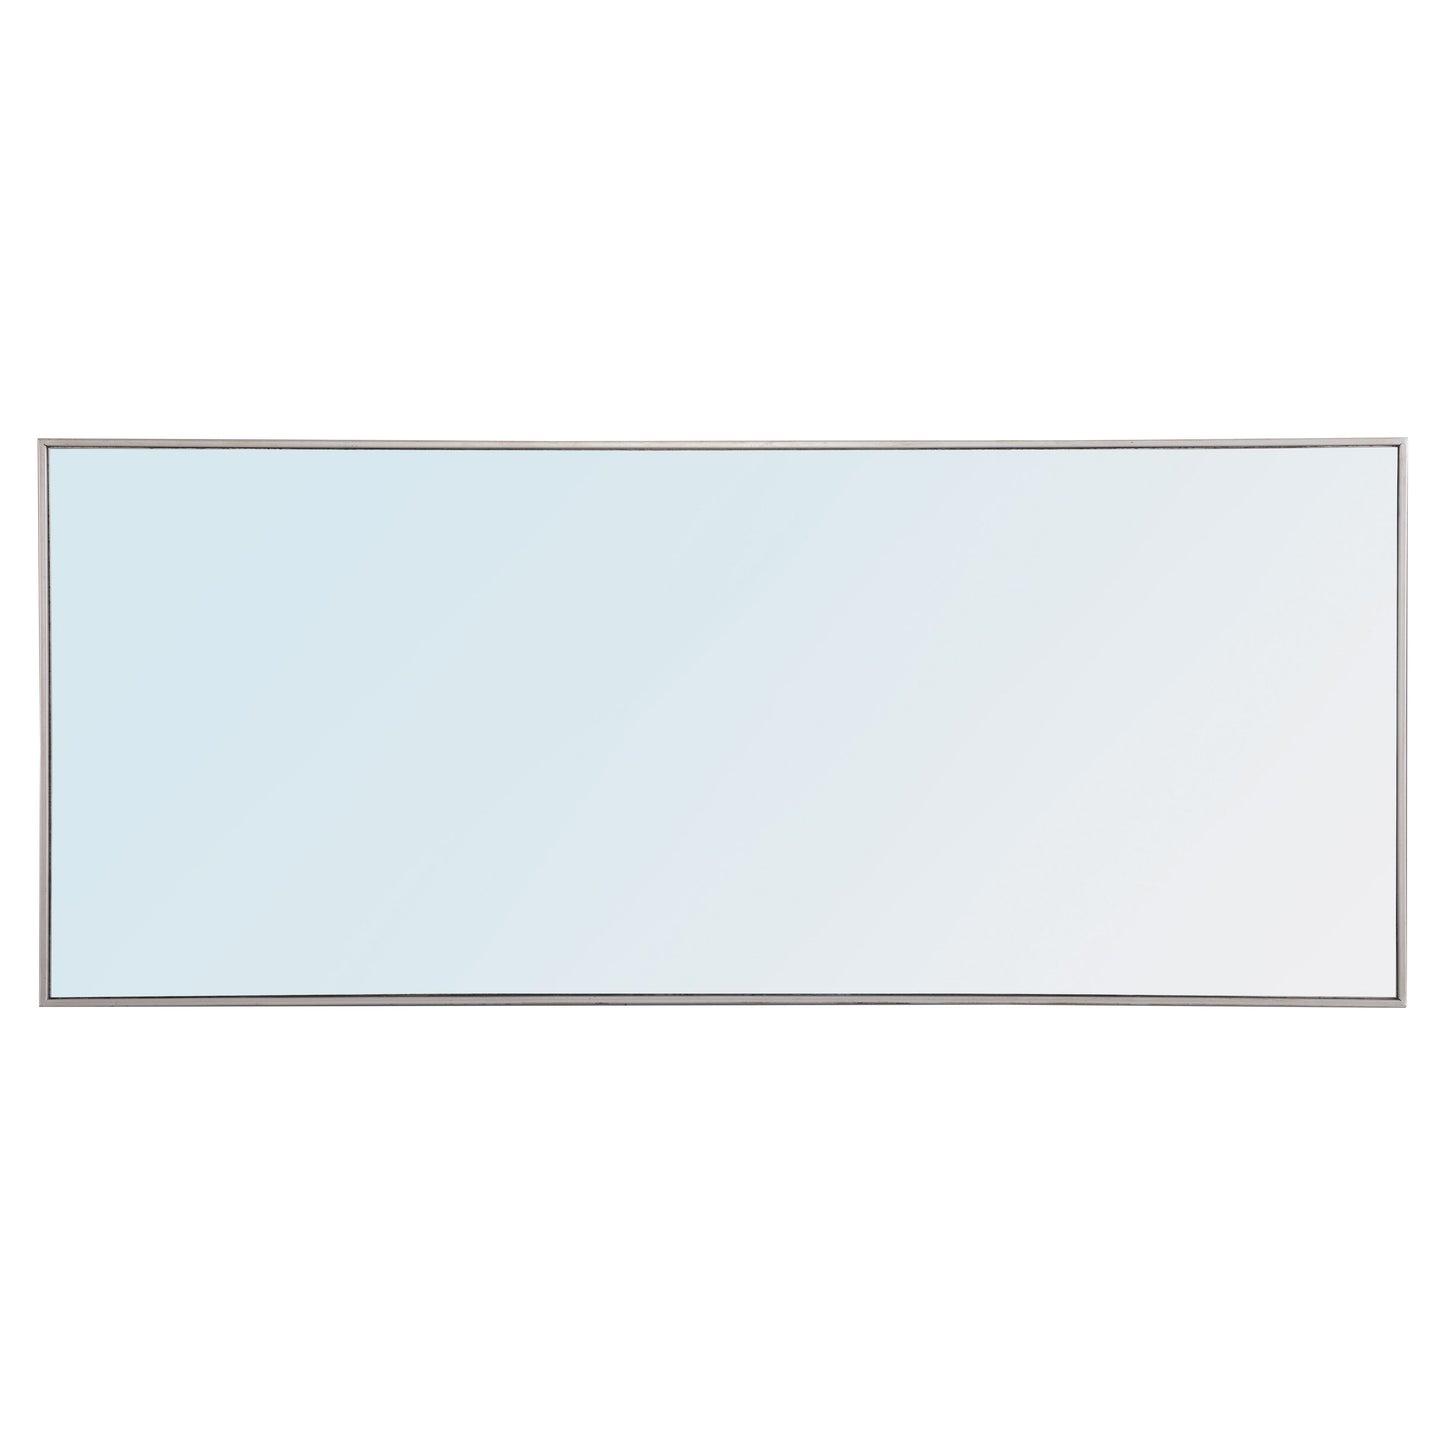 MR4086S Monet 30" x 72" Metal Framed Rectangular Mirror in Silver